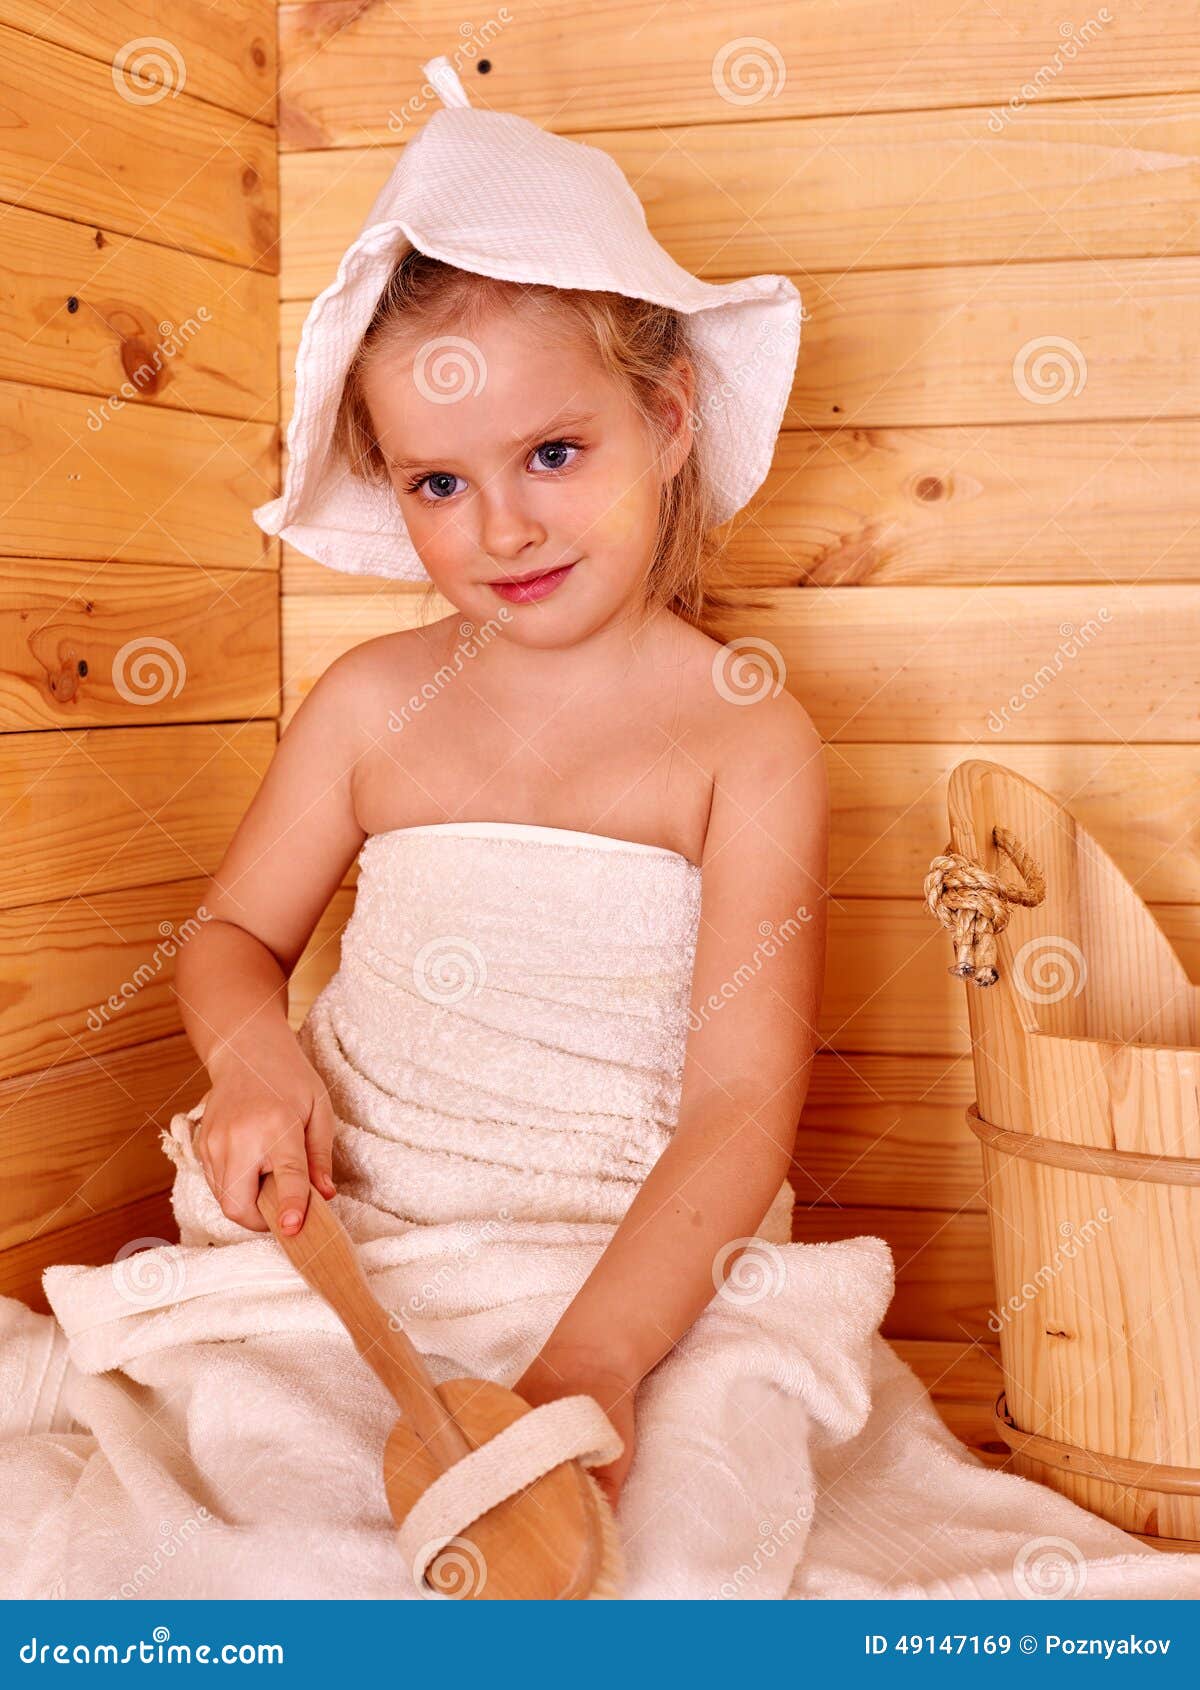 https://thumbs.dreamstime.com/z/child-relaxing-sauna-happy-49147169.jpg